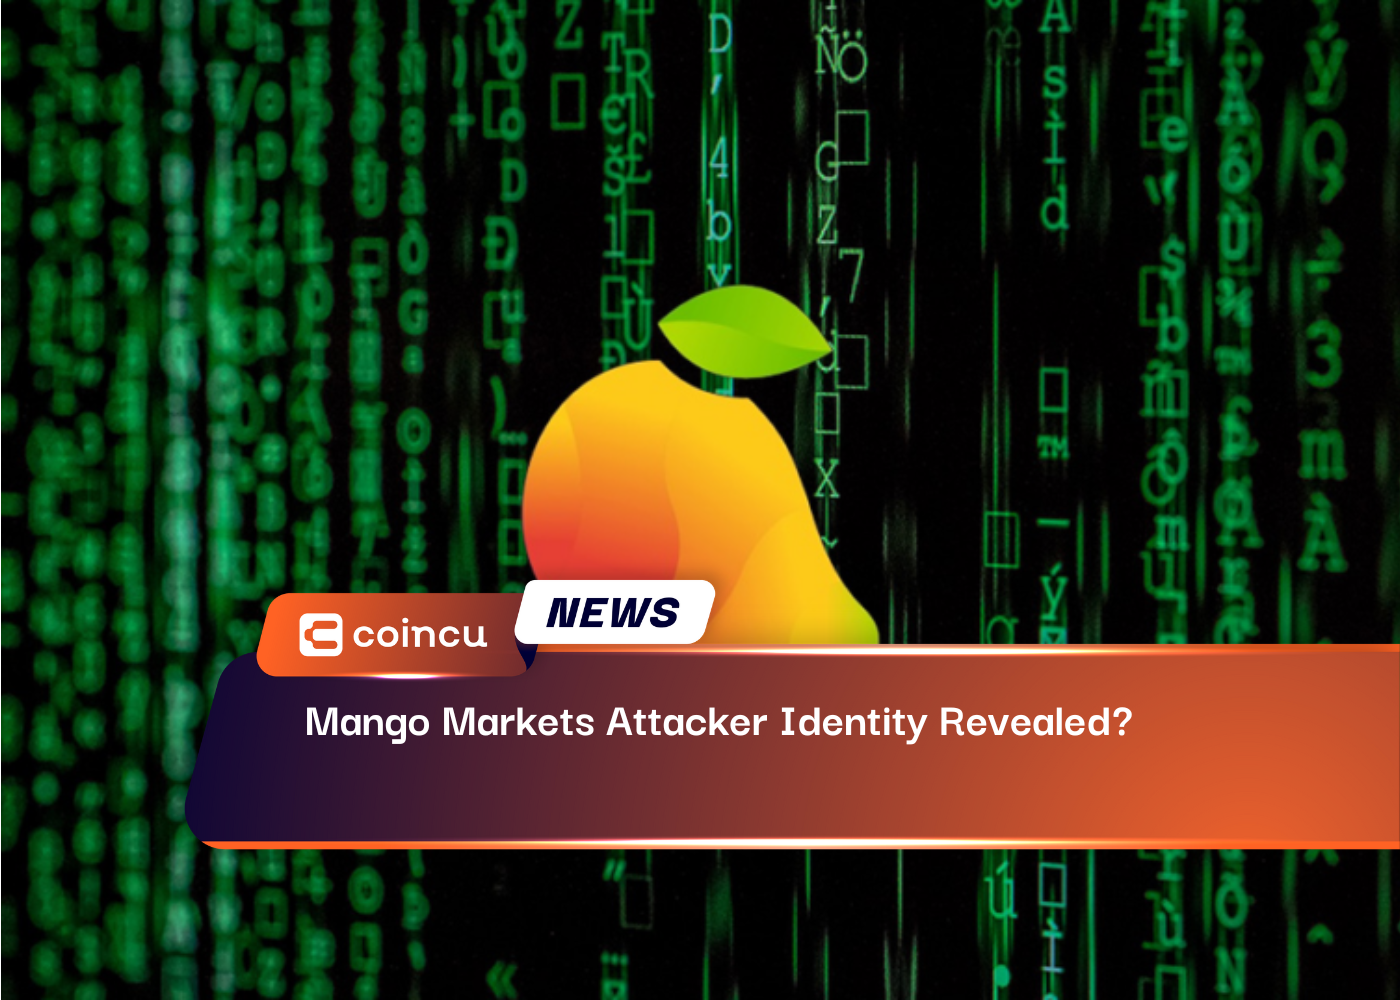 Mango Markets Attacker Identity Revealed?